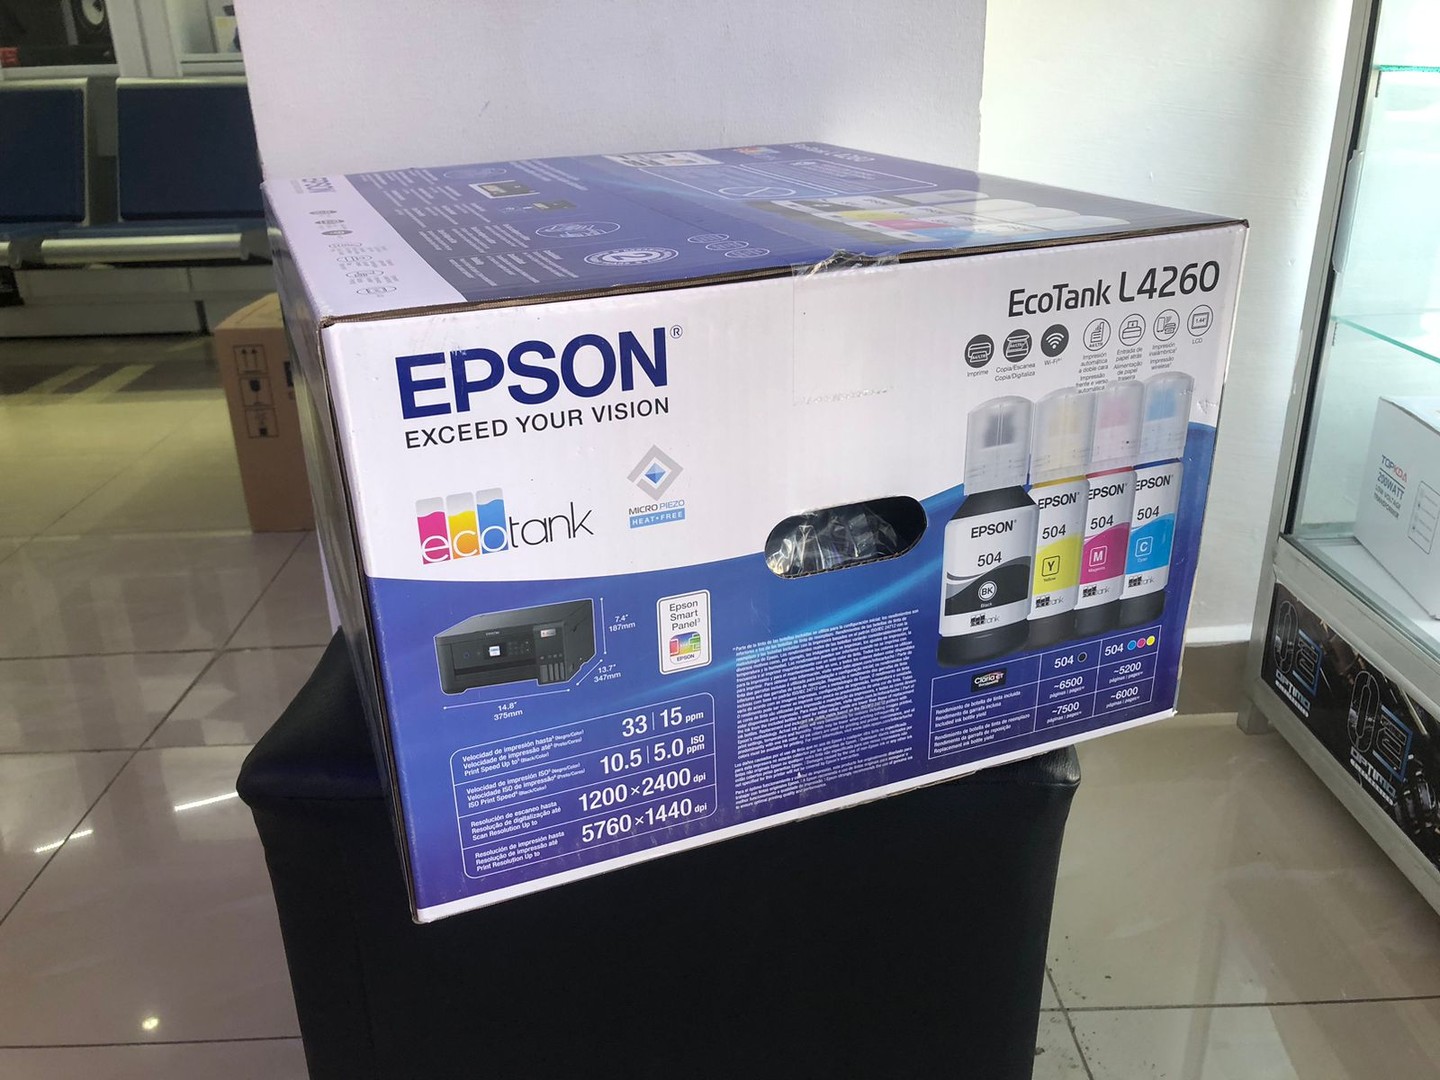 impresoras y scanners - Impresora Epson L4260 Multifuncion, Wifi y Cable USB - Pantalla LCD 2